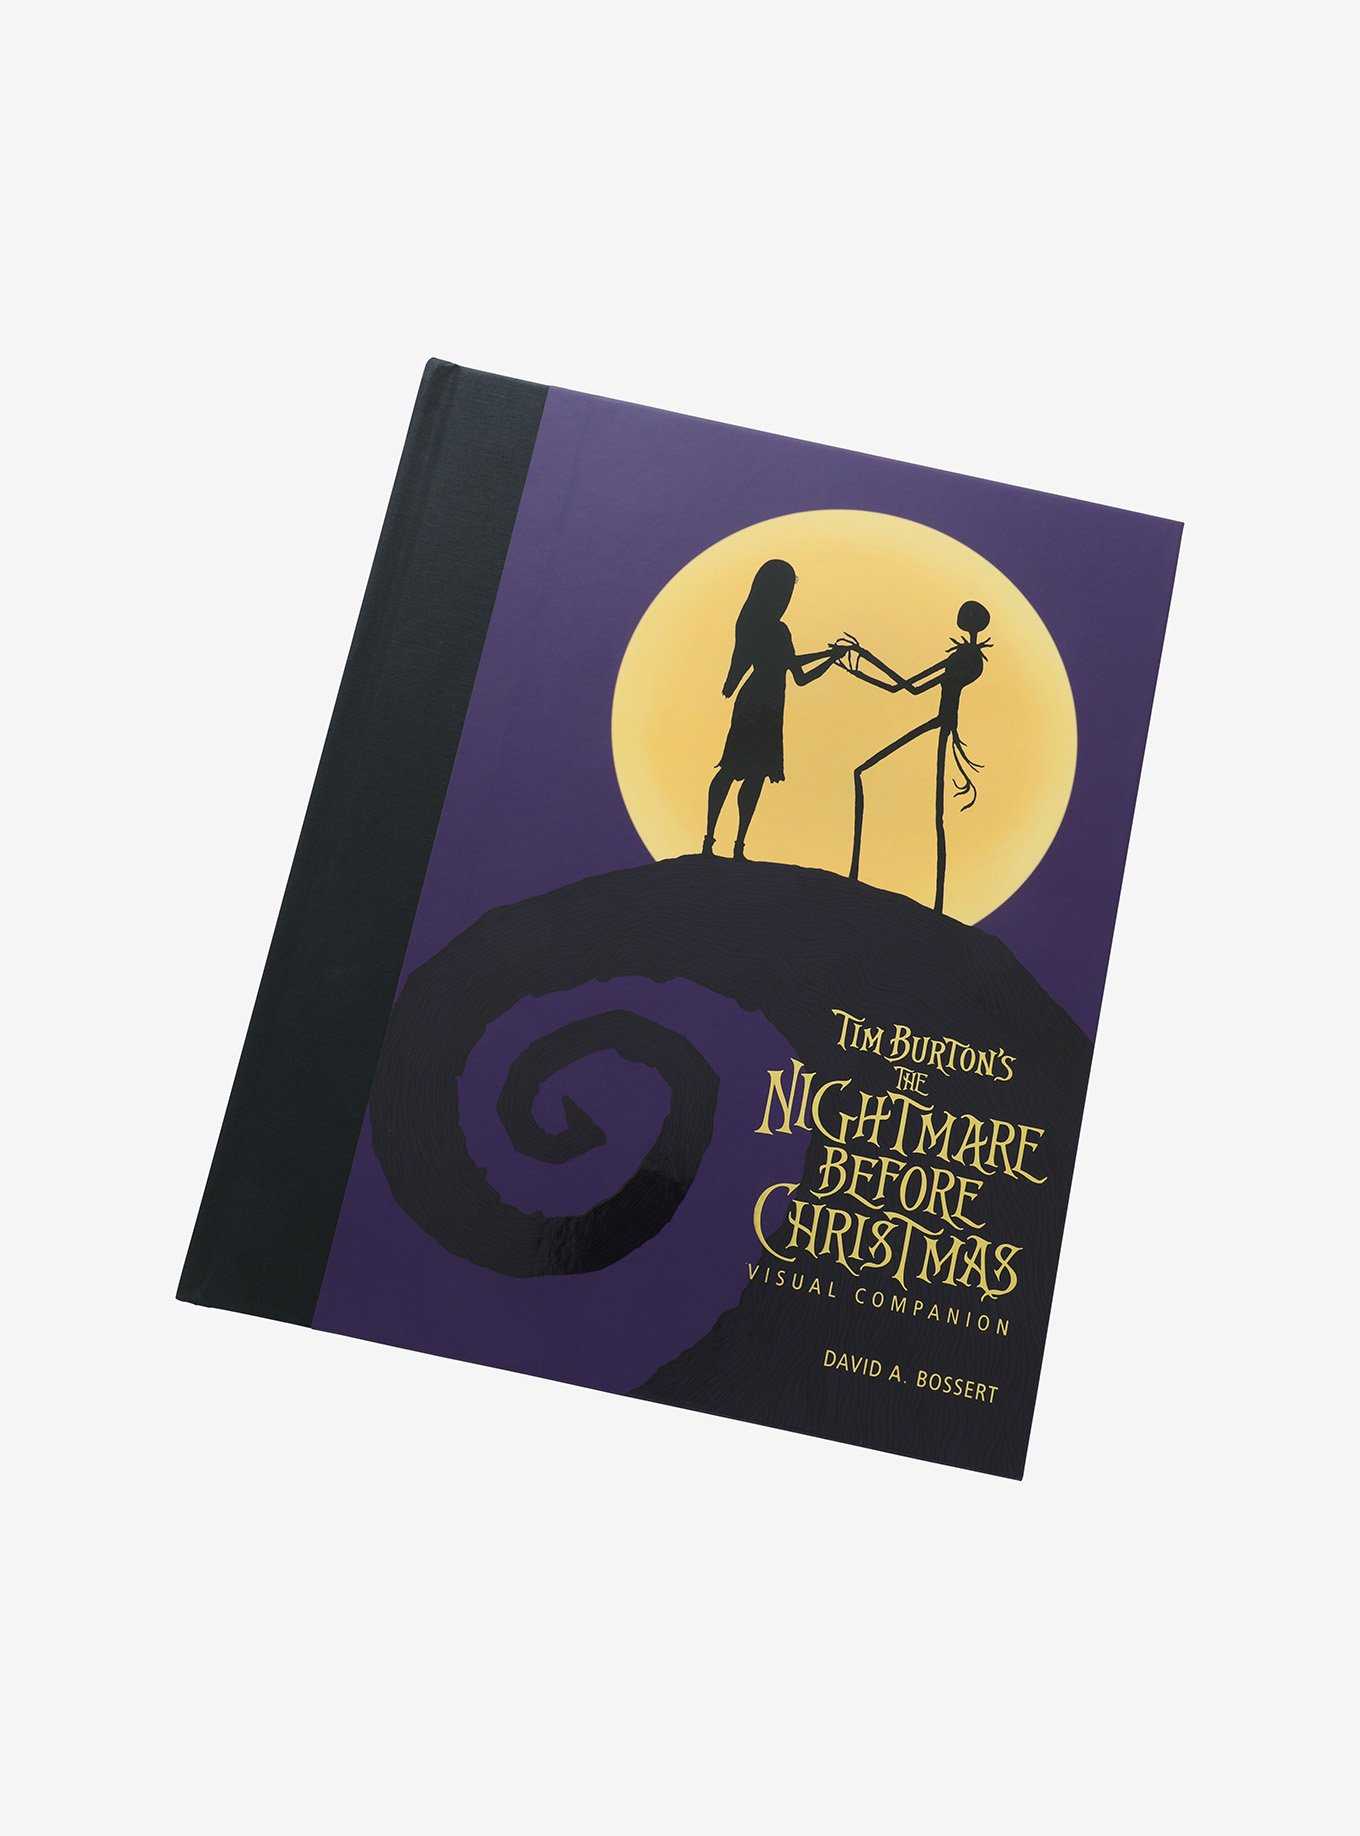 The Nightmare Before Christmas Visual Companion Hardcover Book